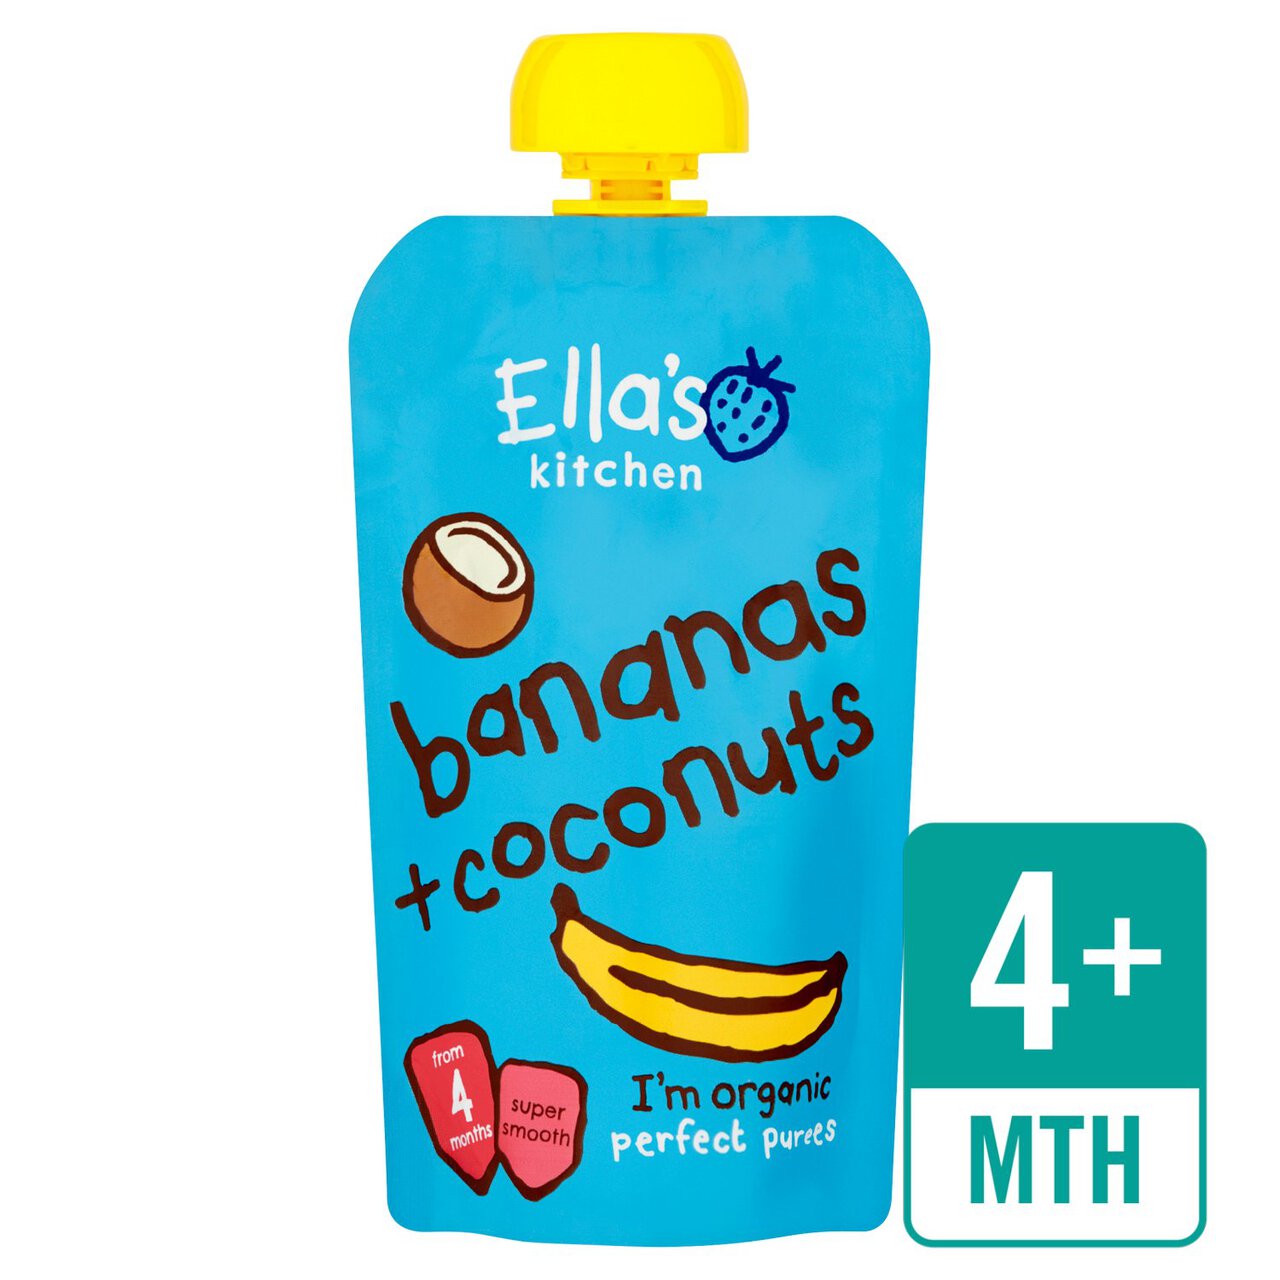 Ella's Kitchen Bananas & Coconuts Organic Puree Pouch, 4 mths+ 120g